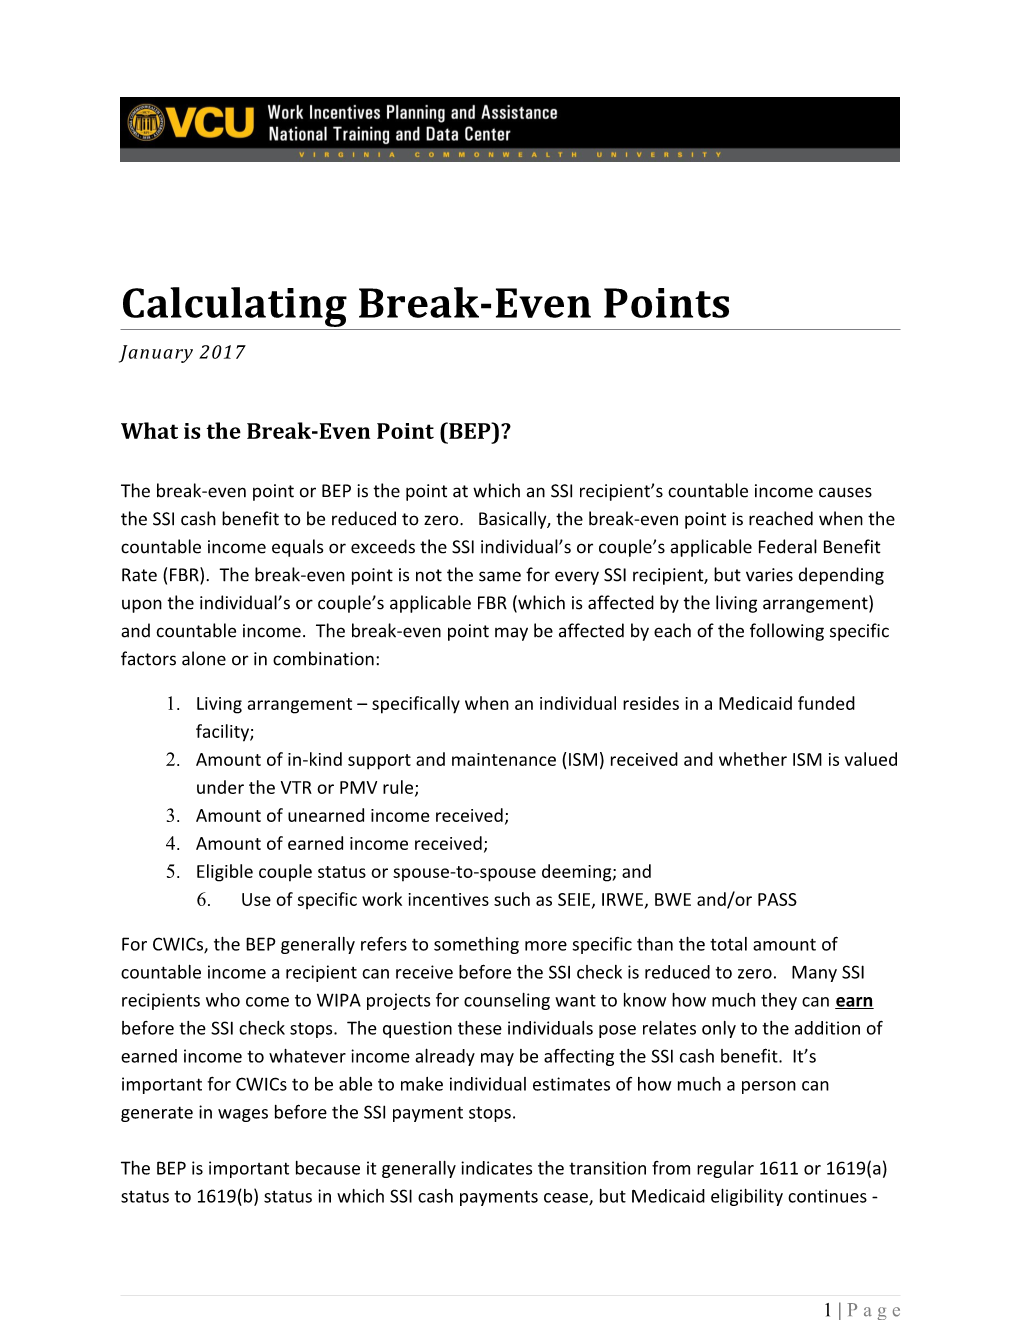 Calculating Break Even Points